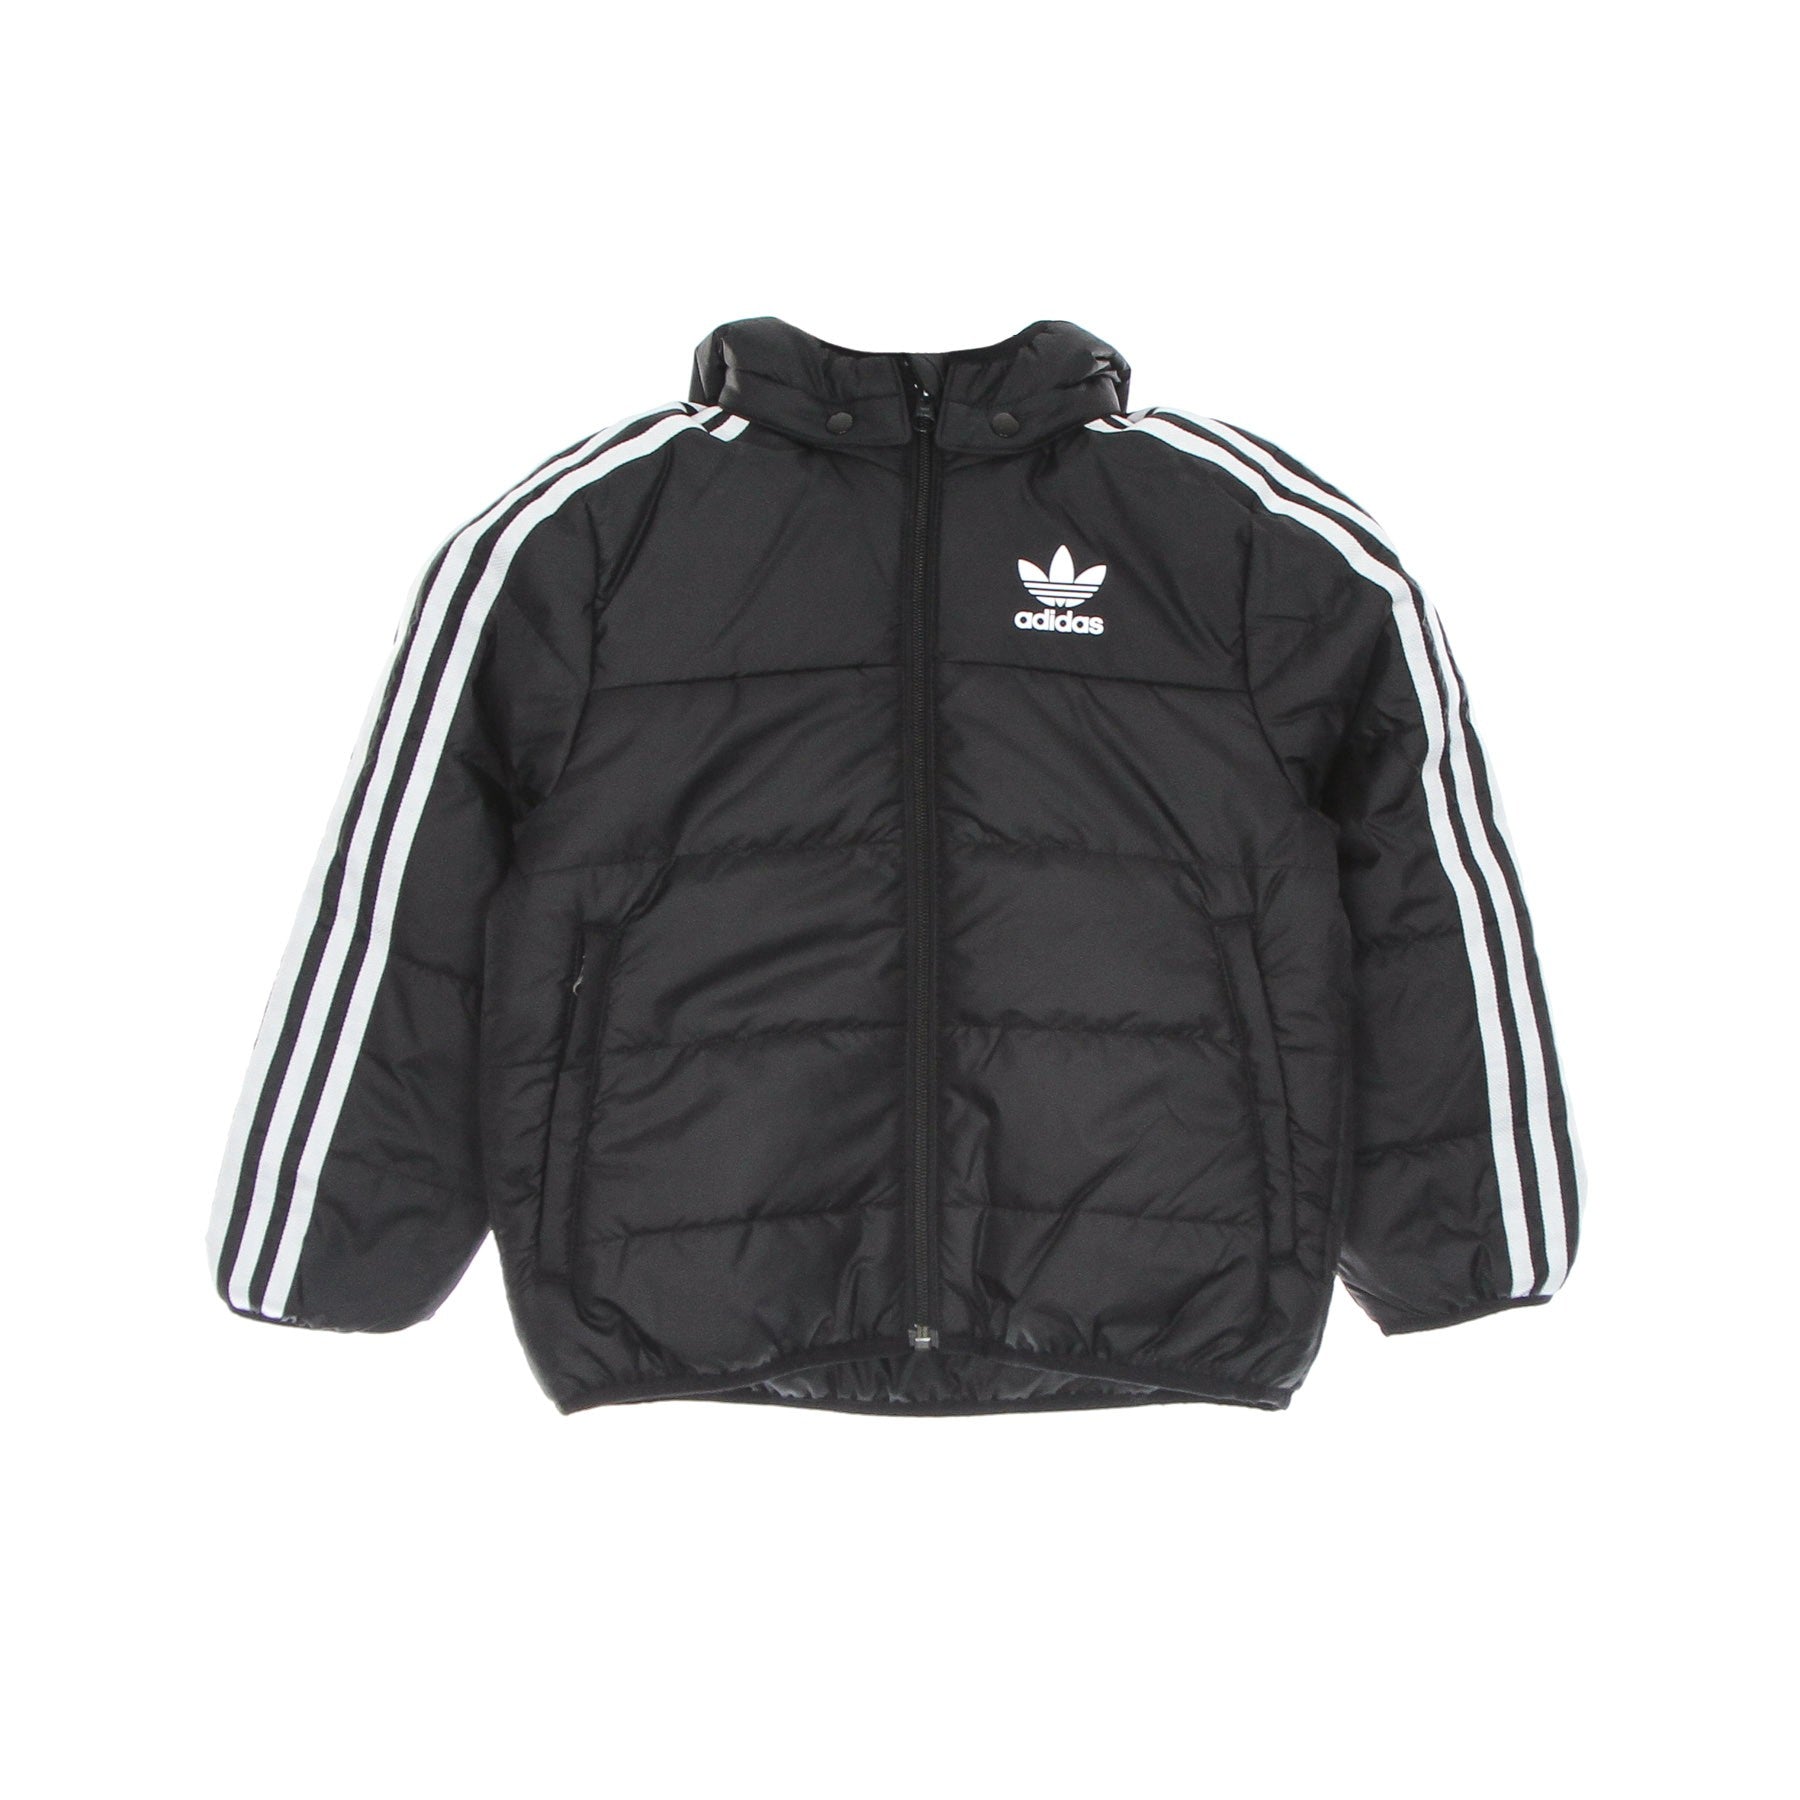 Adidas, Piumino Ragazzo Padded Jacket, Black/white